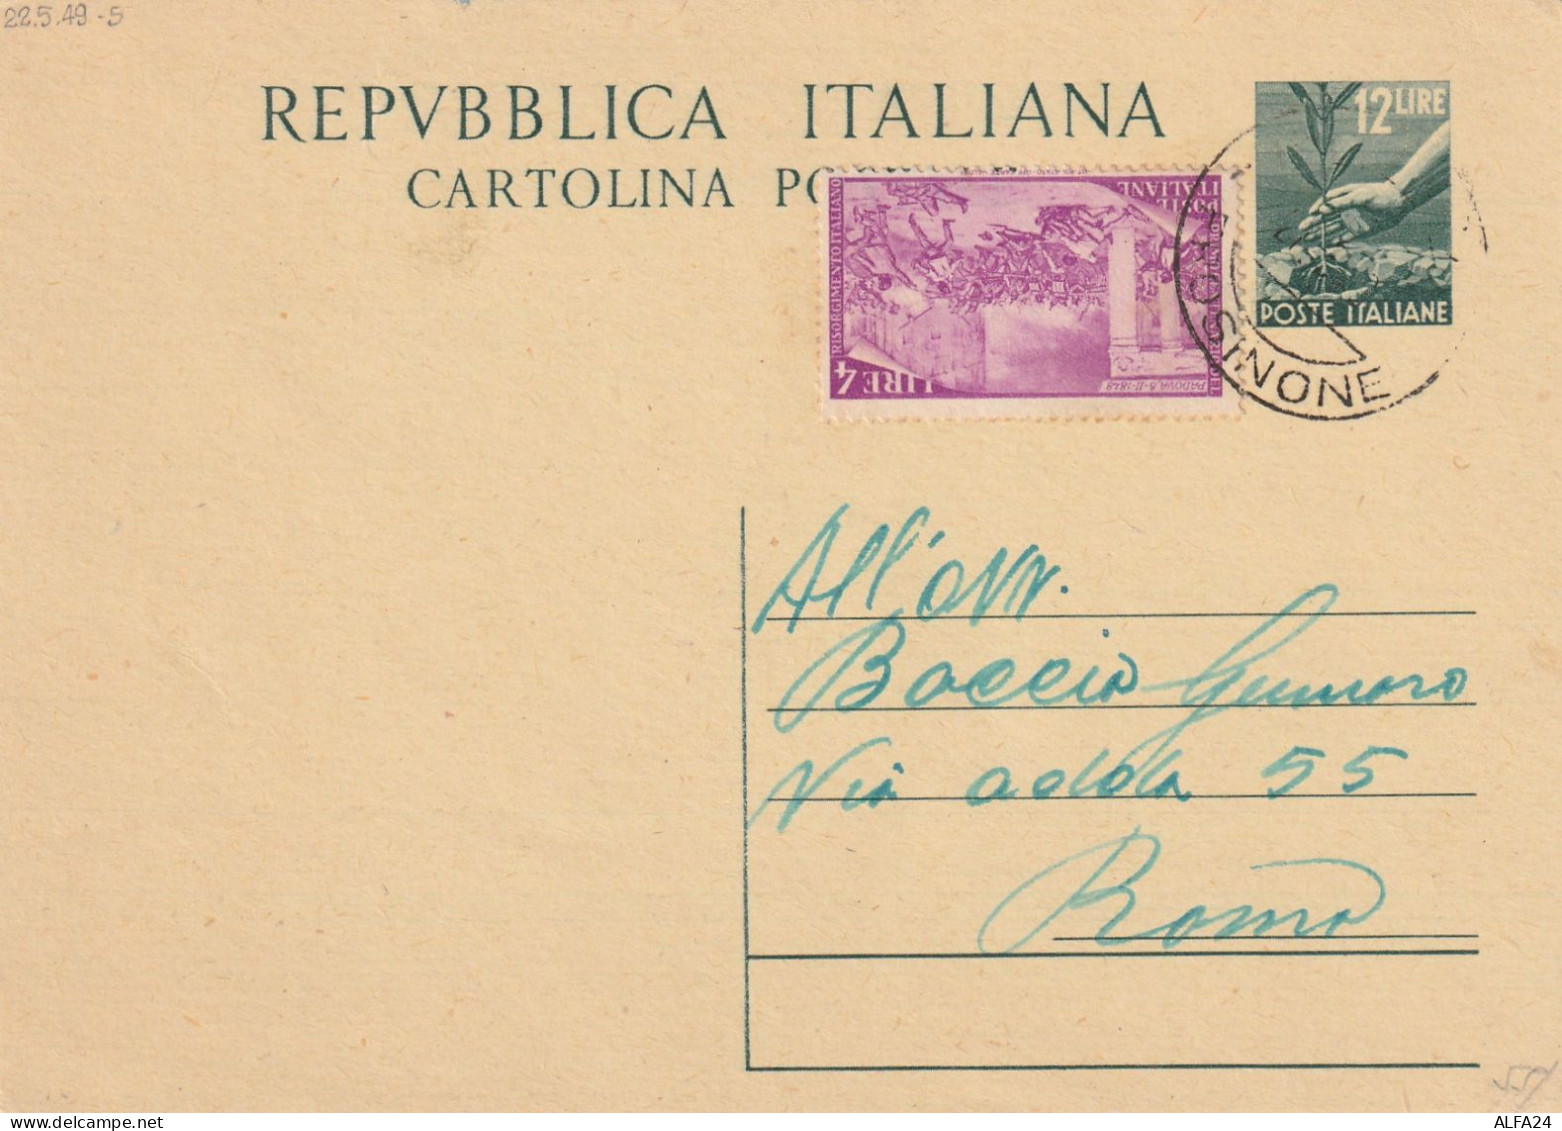 INTERO POSTALE 1949 L.12+4 RISORGIMENTO TIMBRO FROSINONE (YK200 - Stamped Stationery